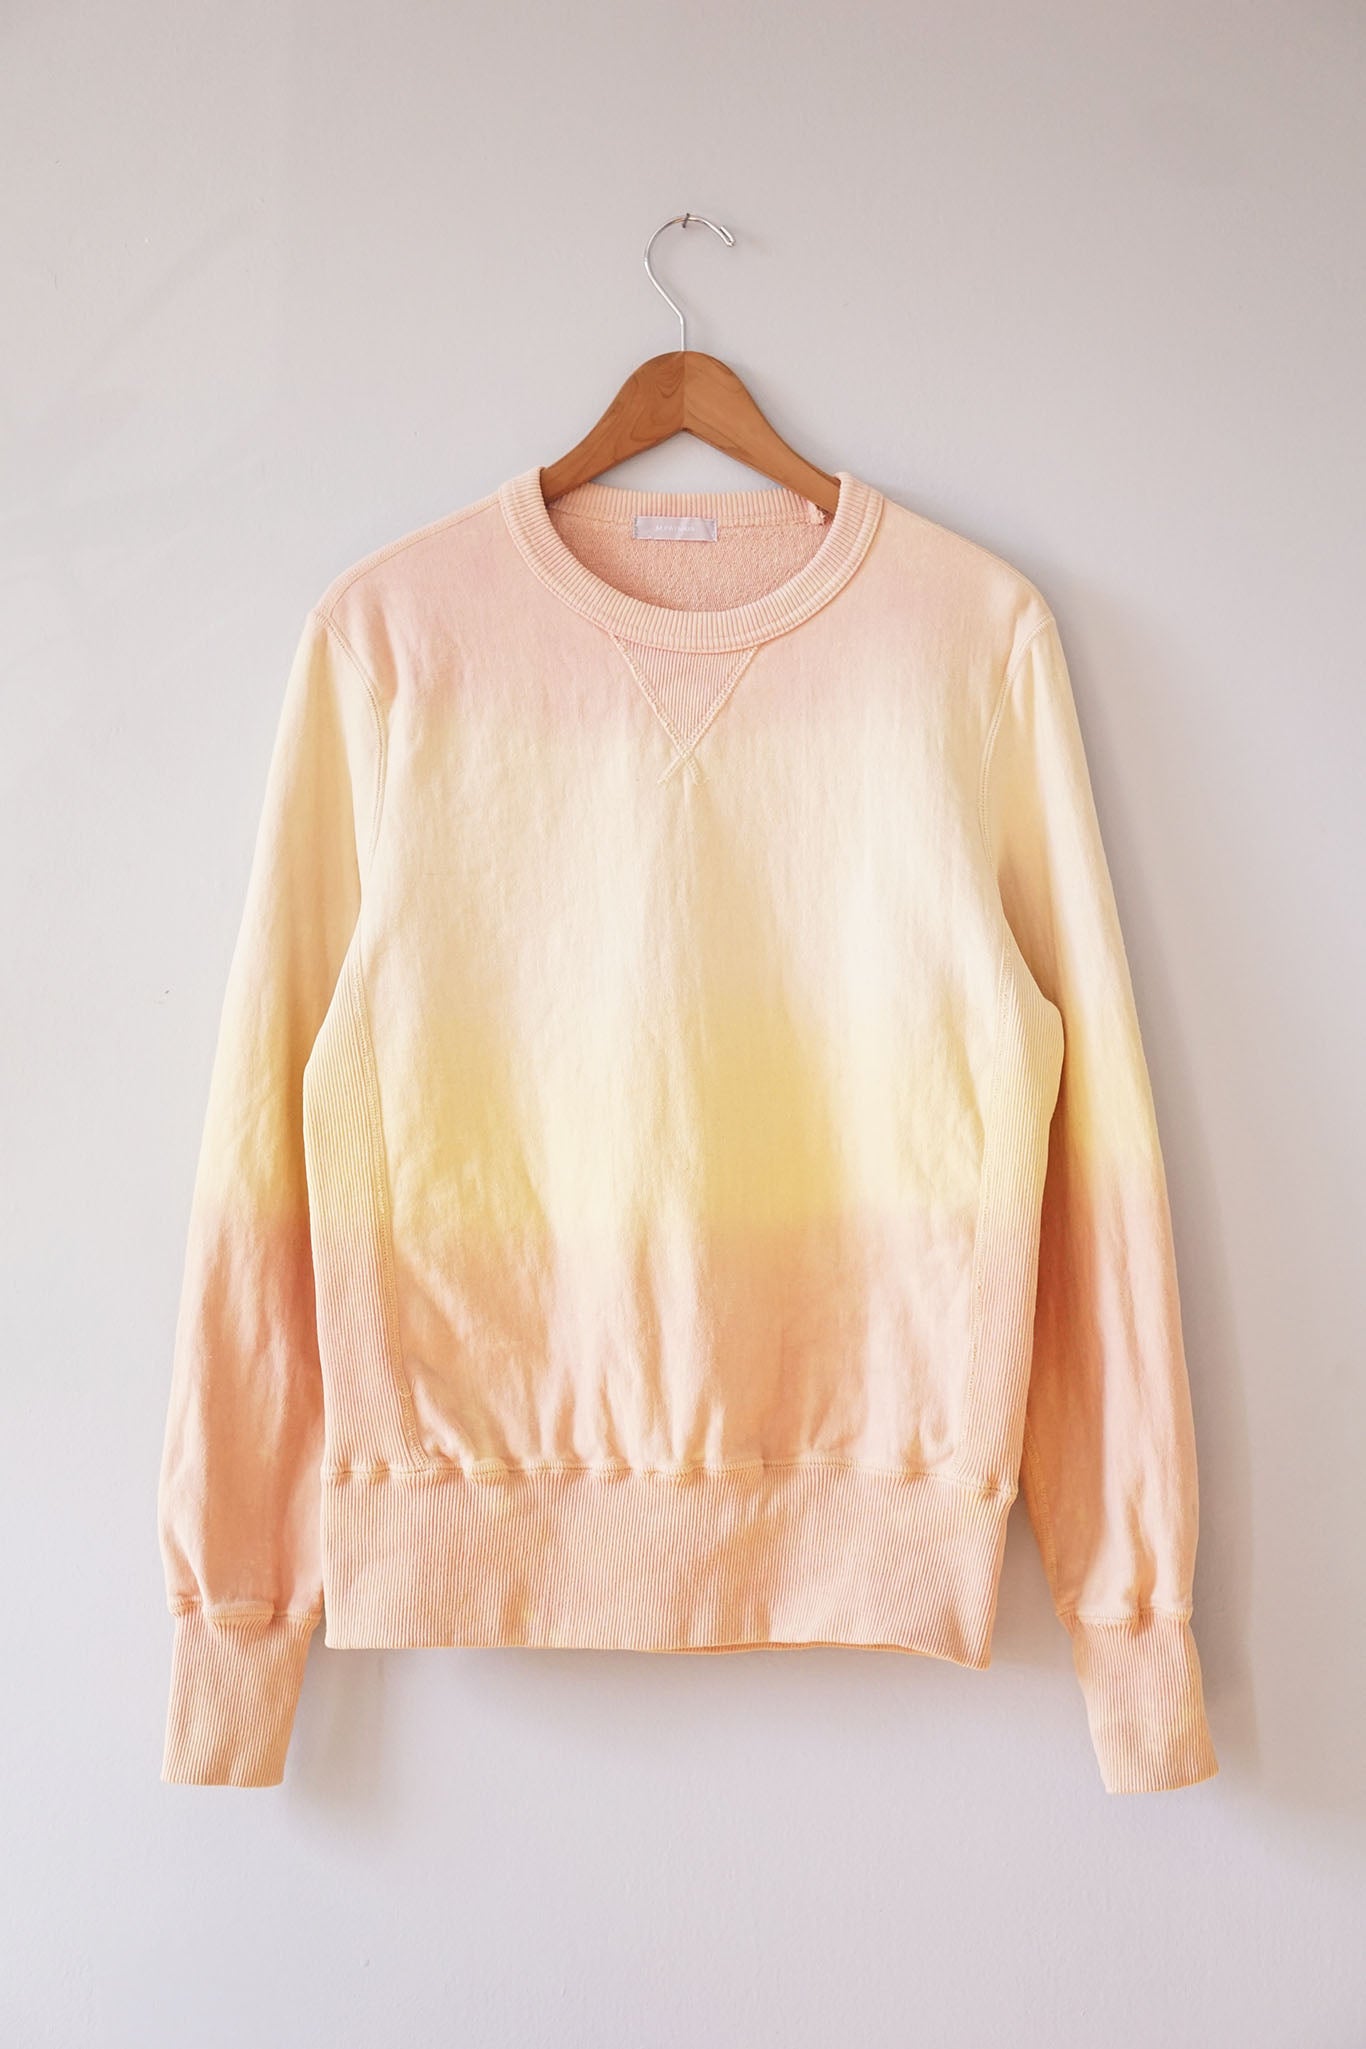 100% cotton terry cloth unisex sweatshirt. Brooklyn Style.